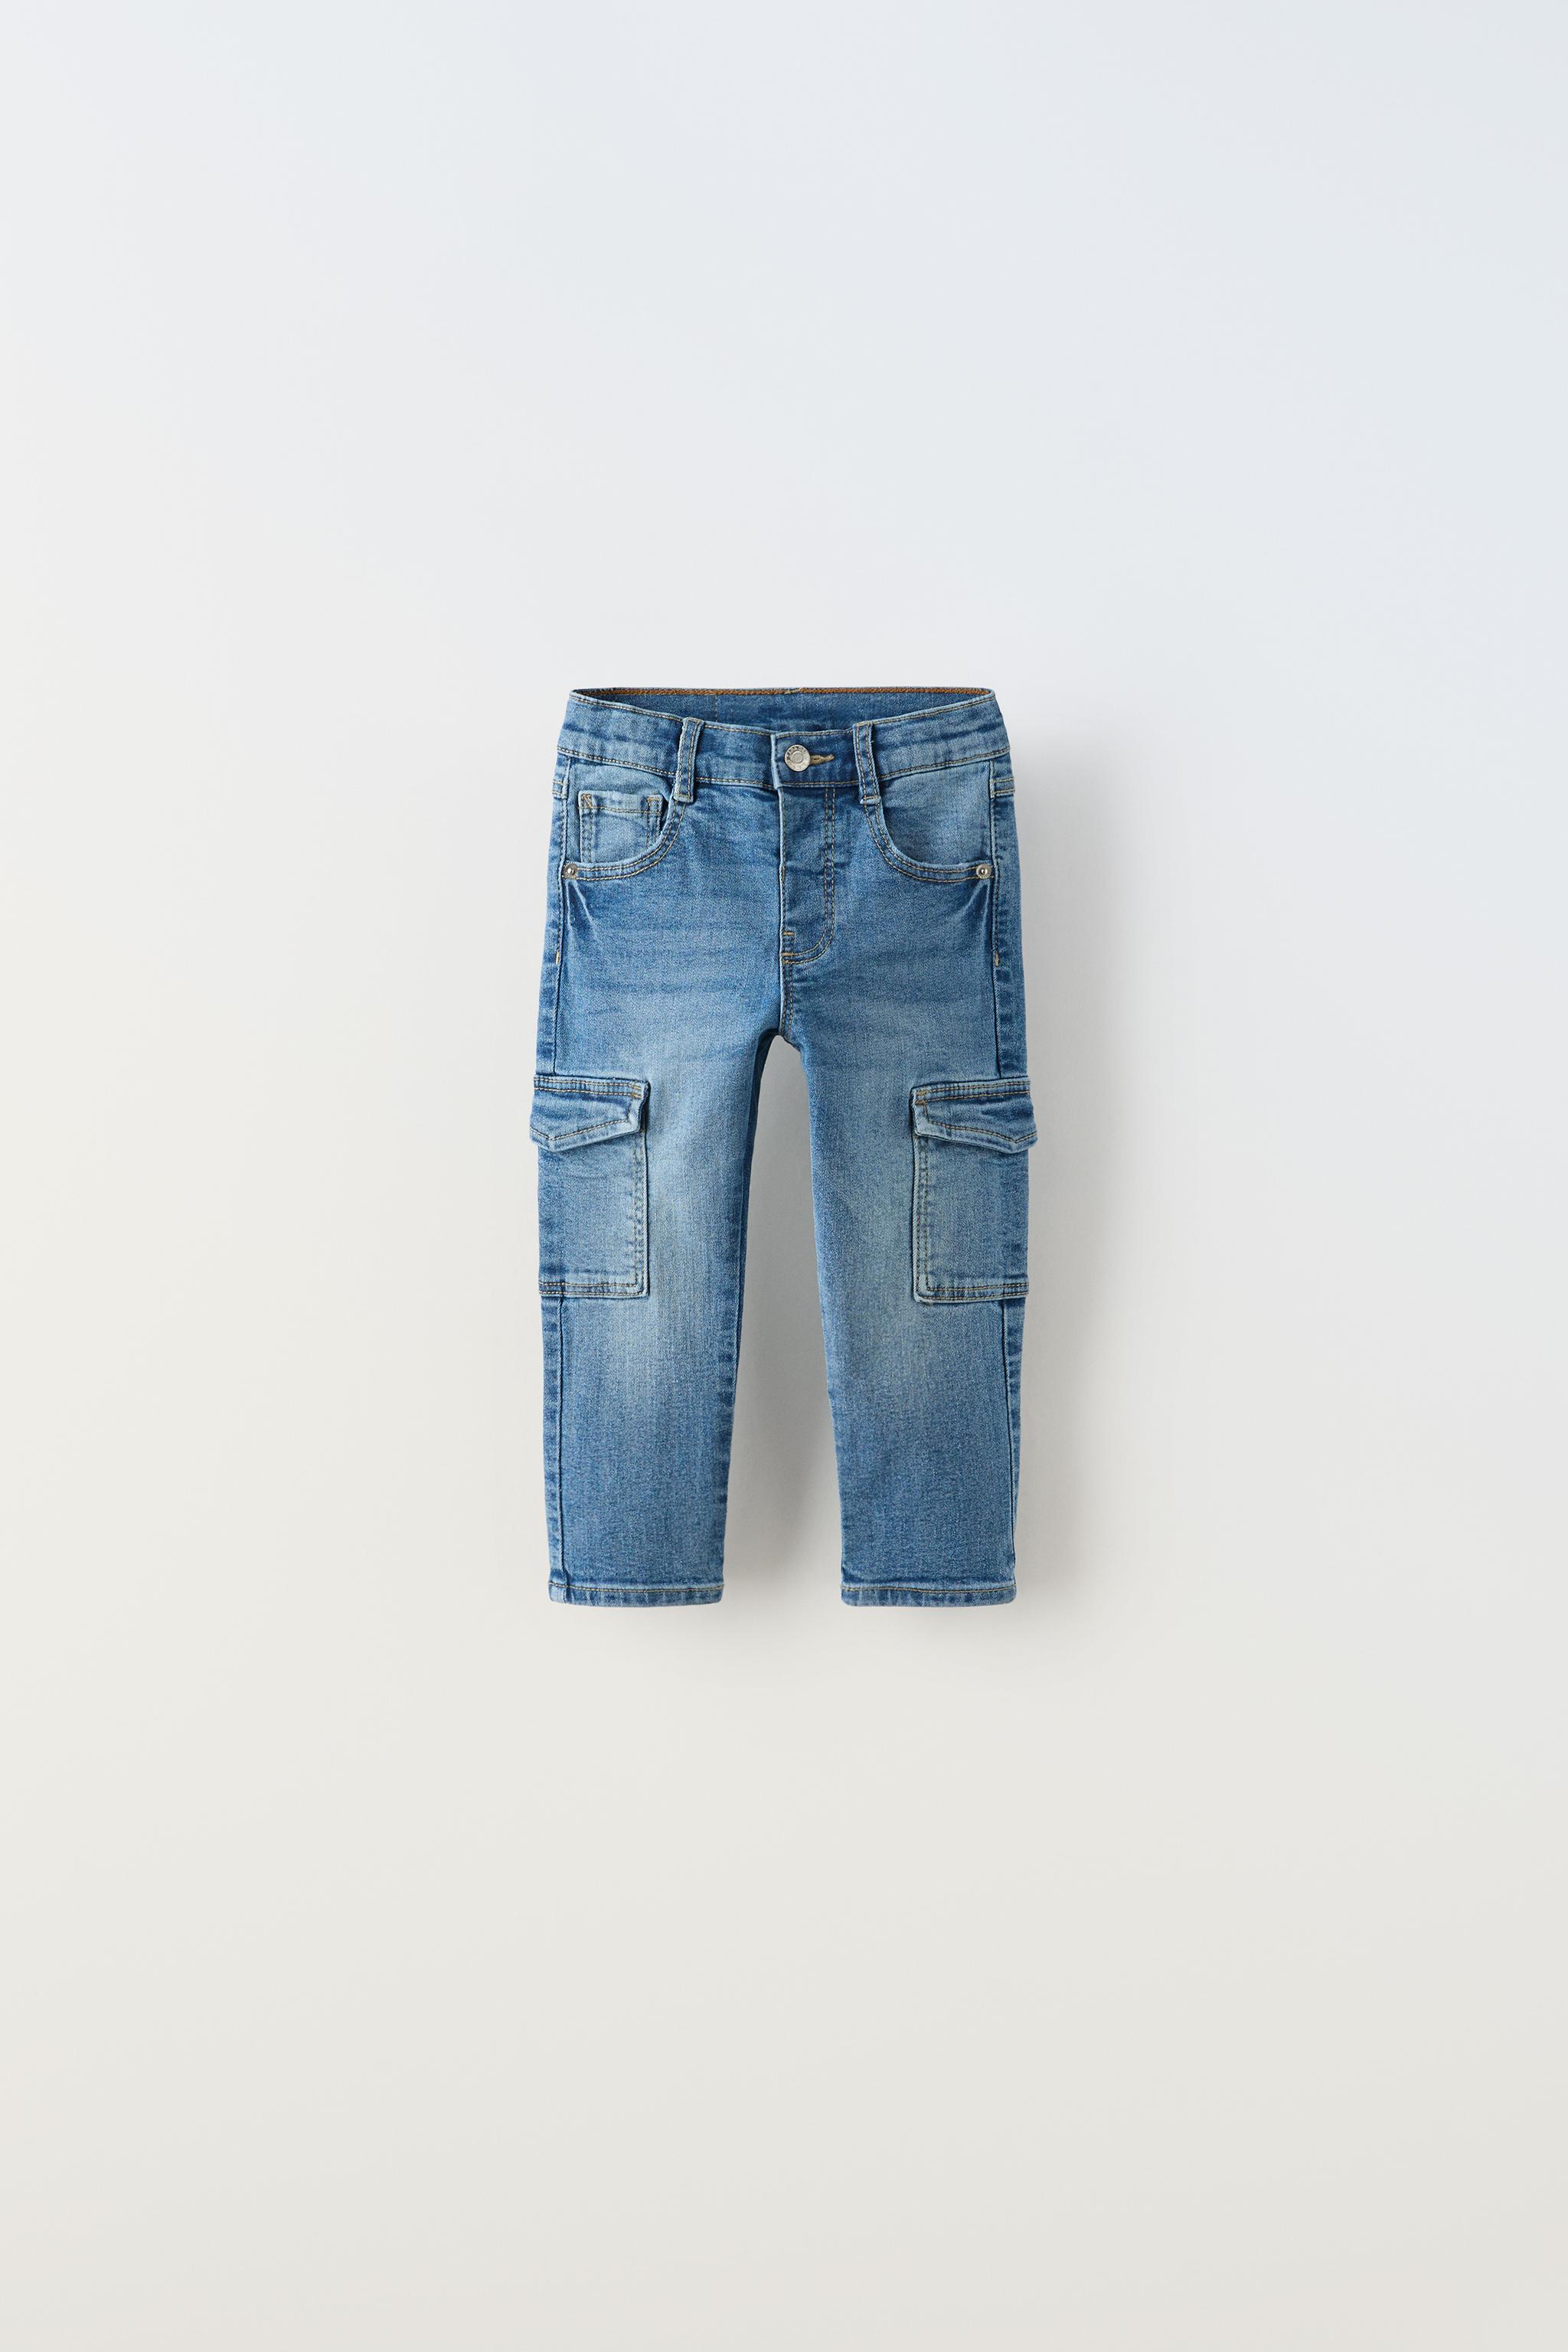 Zara cargo Jeans now available. Price-$8500 Sizes- S M L #AllThingsXhibitK